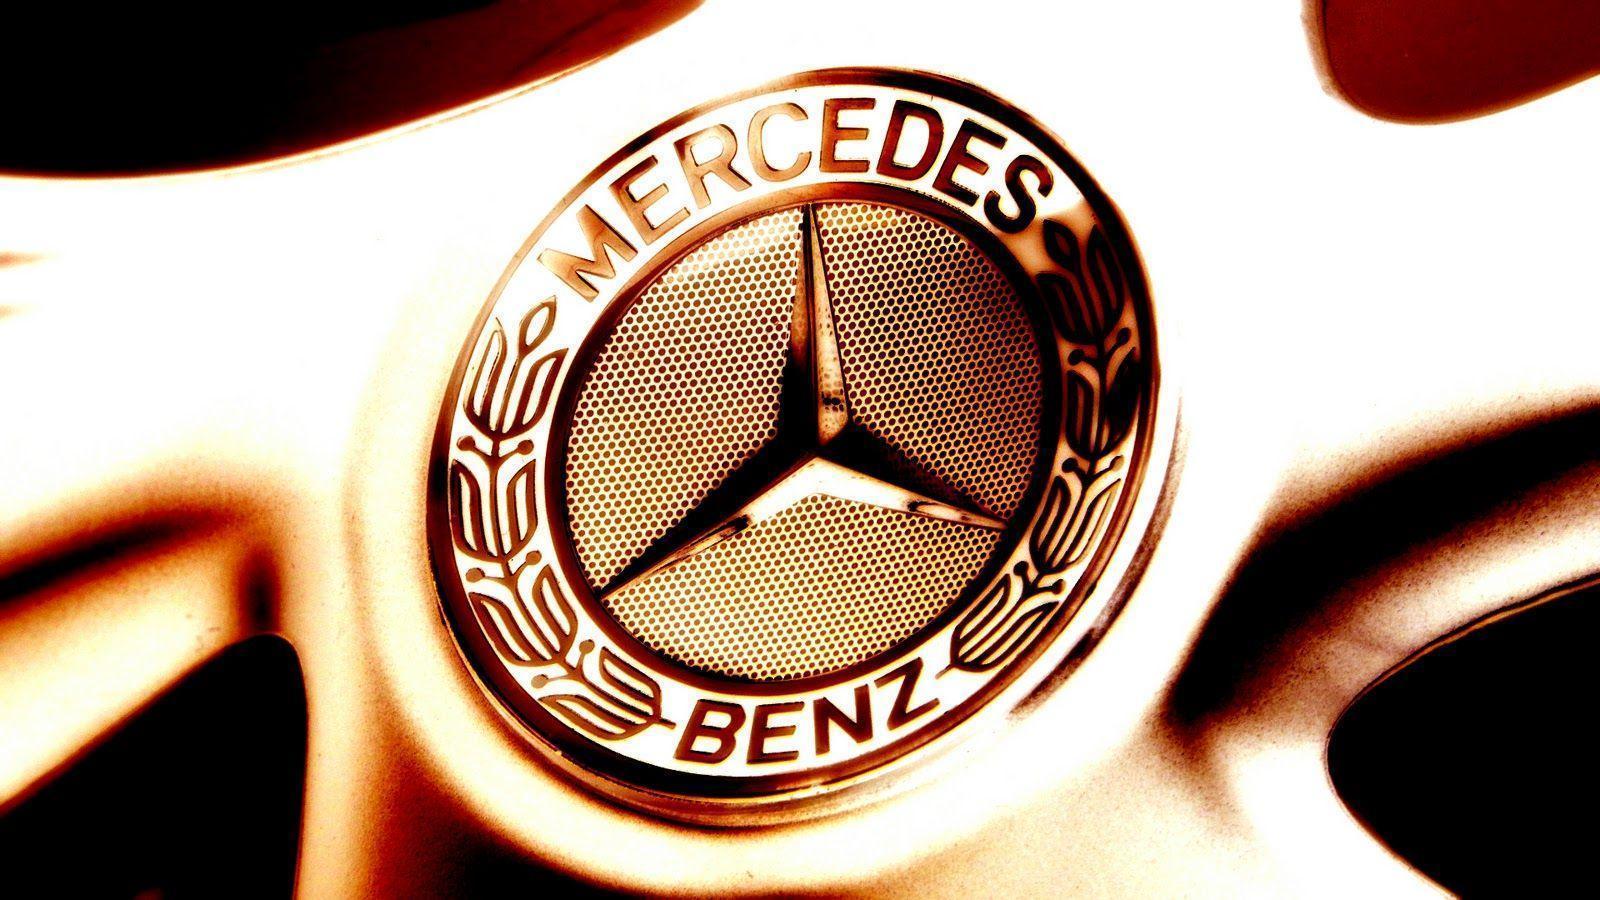 Mercedes Logo Wallpapers